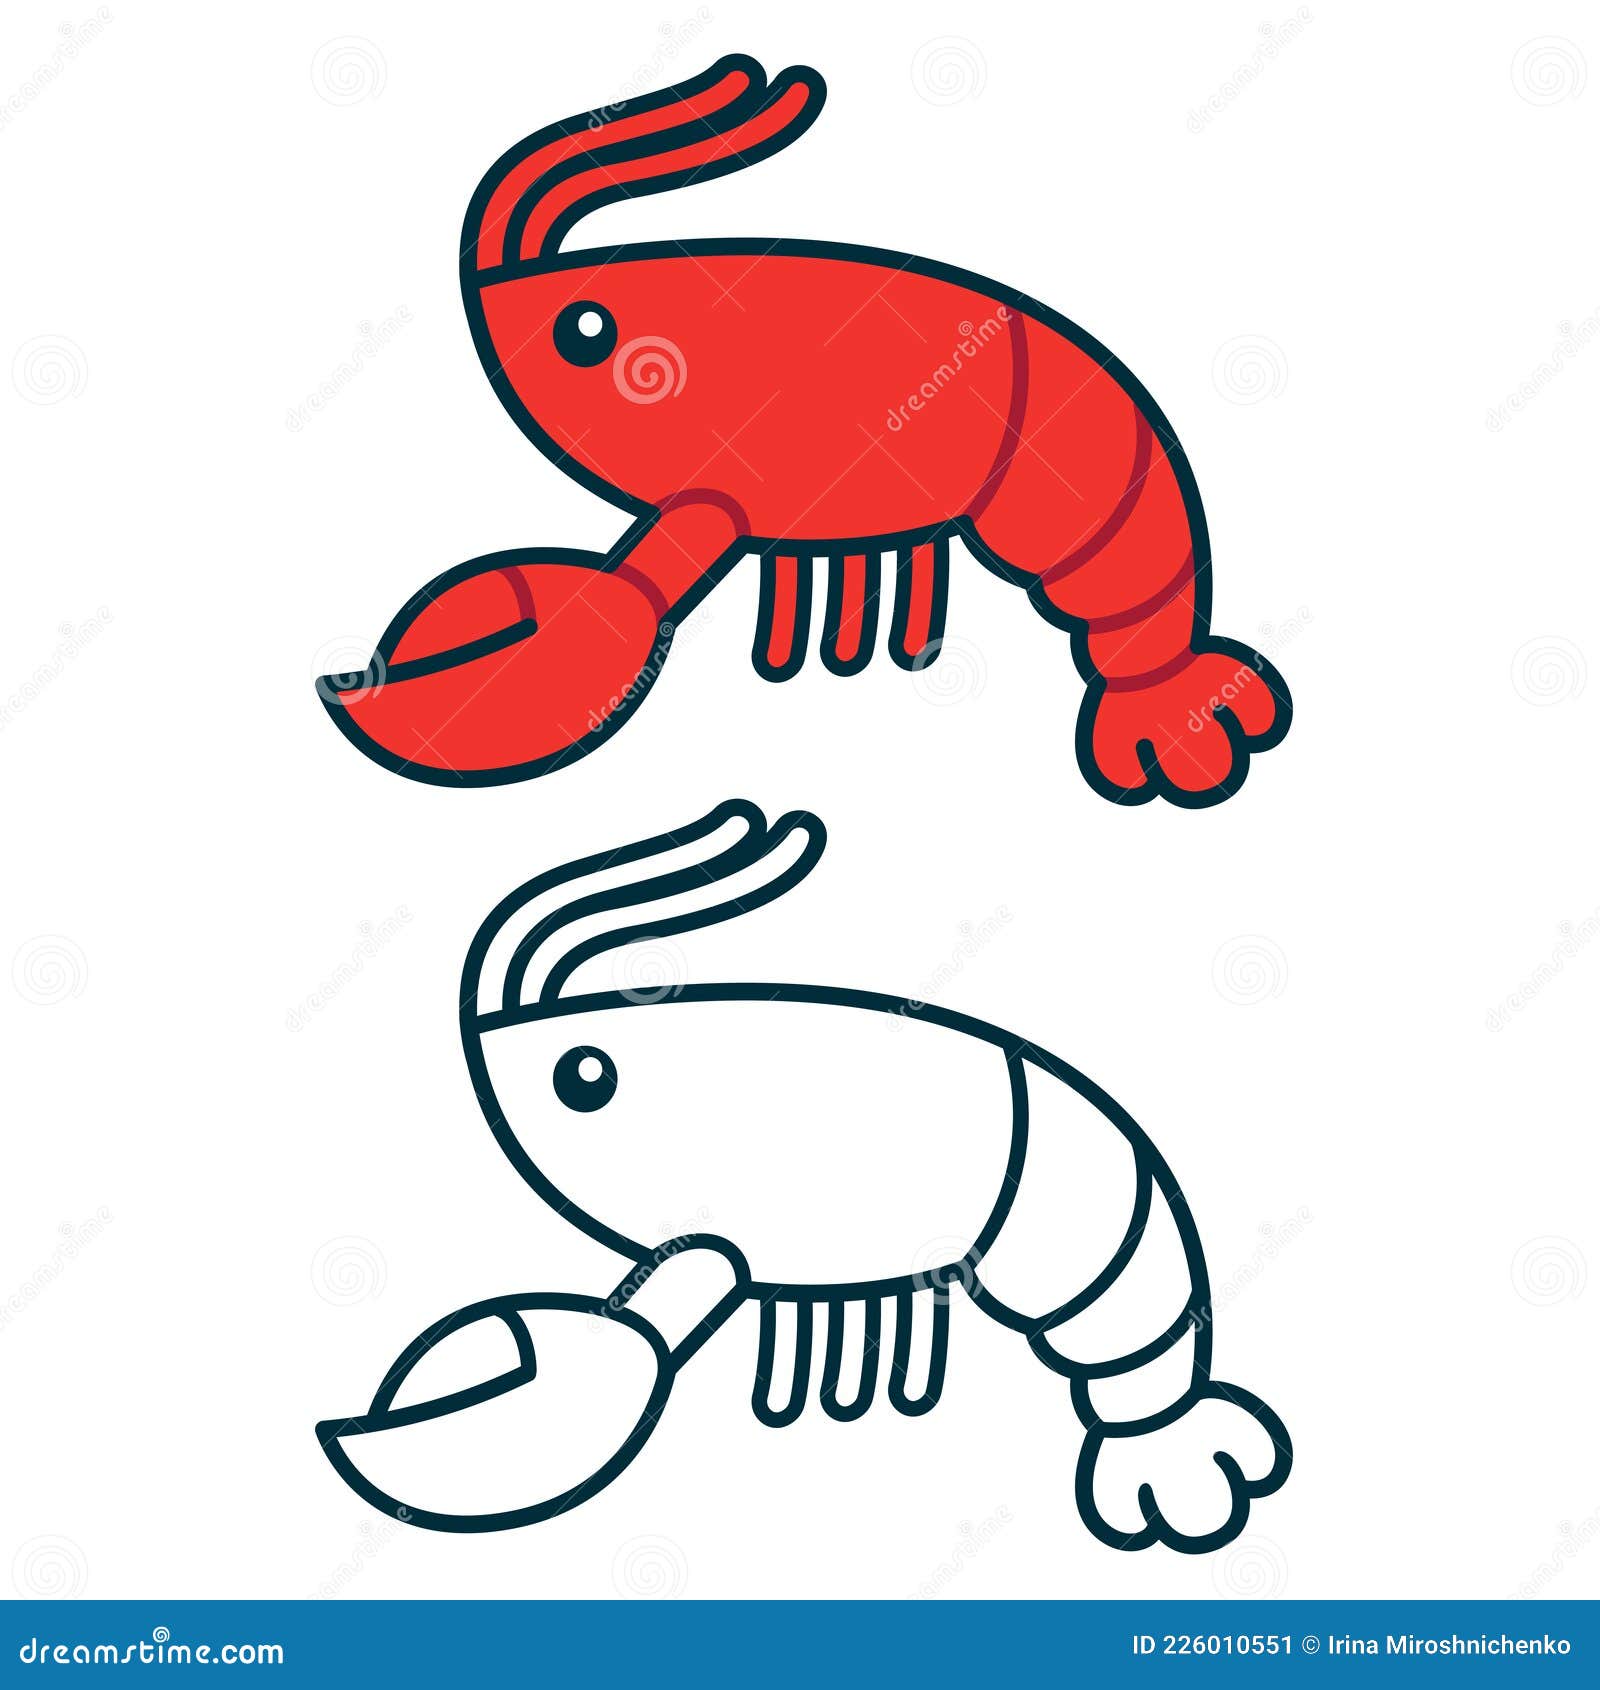 Cartoon Lobster or Crawfish Drawing Stock Vector - Illustration of